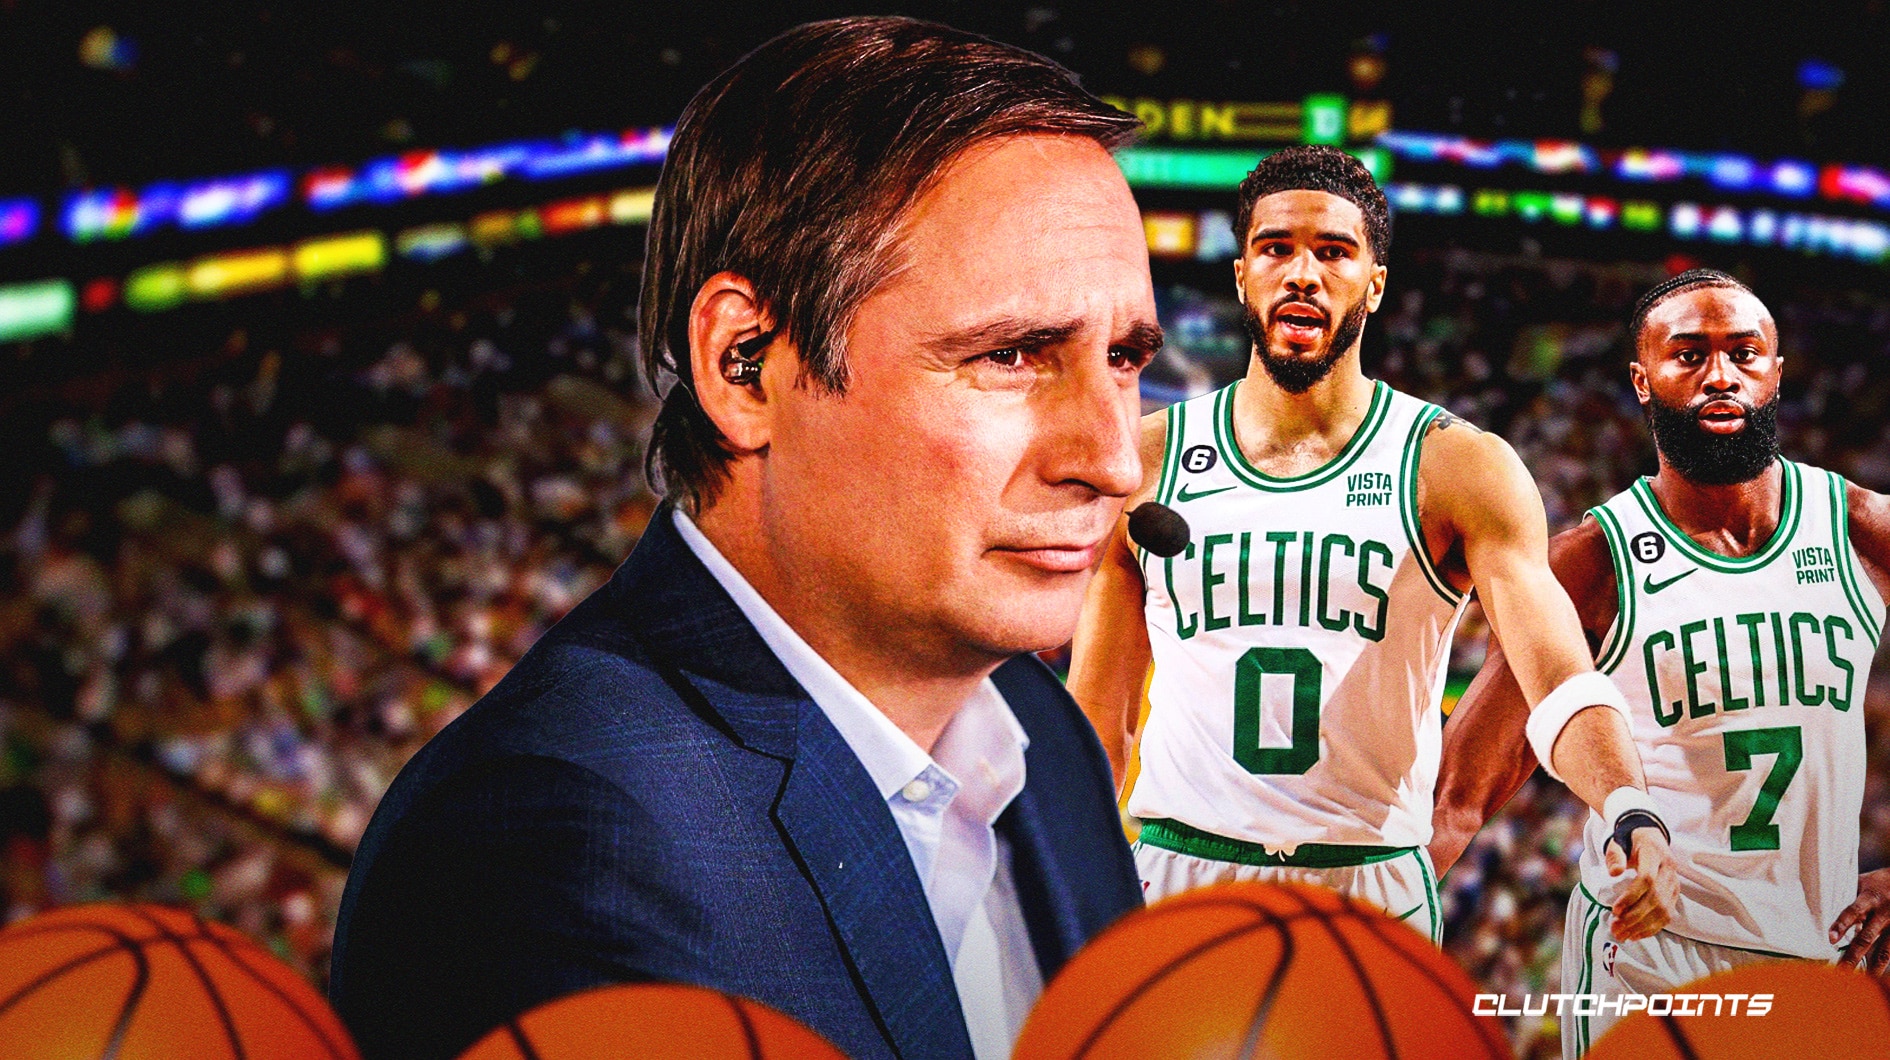 Celtics will steamroll Heat in Game 7, says ESPNs Zach Lowe